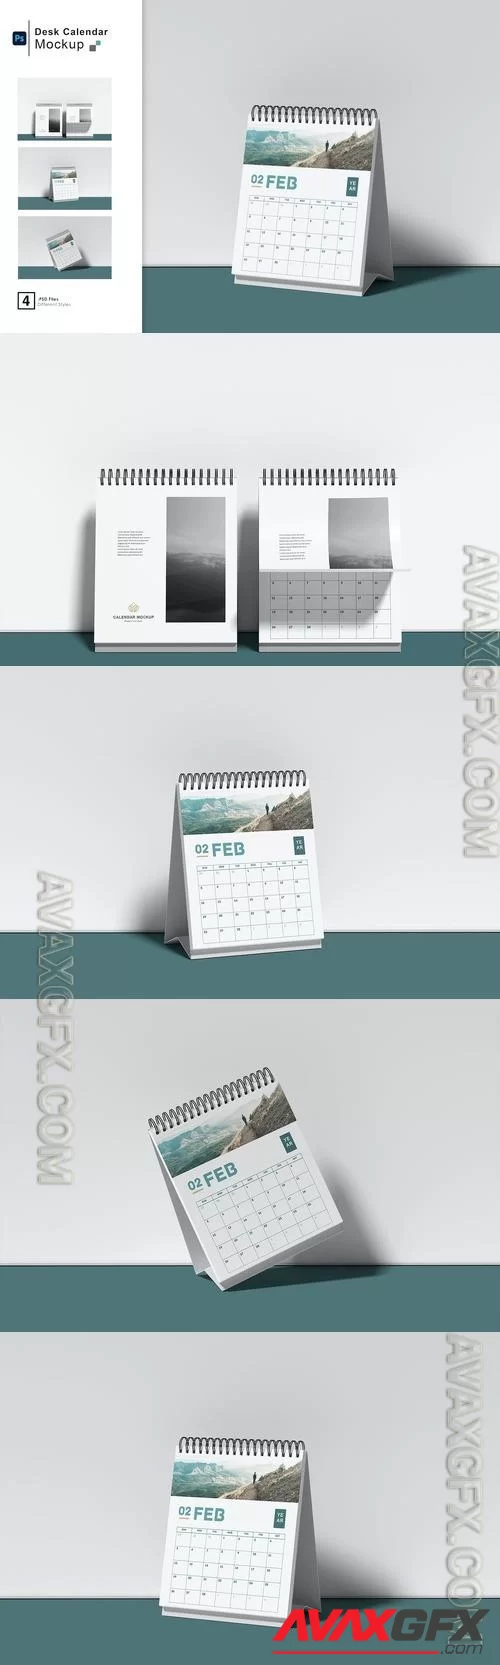 Desk Calendar Mockup BJMY9QE [PSD]